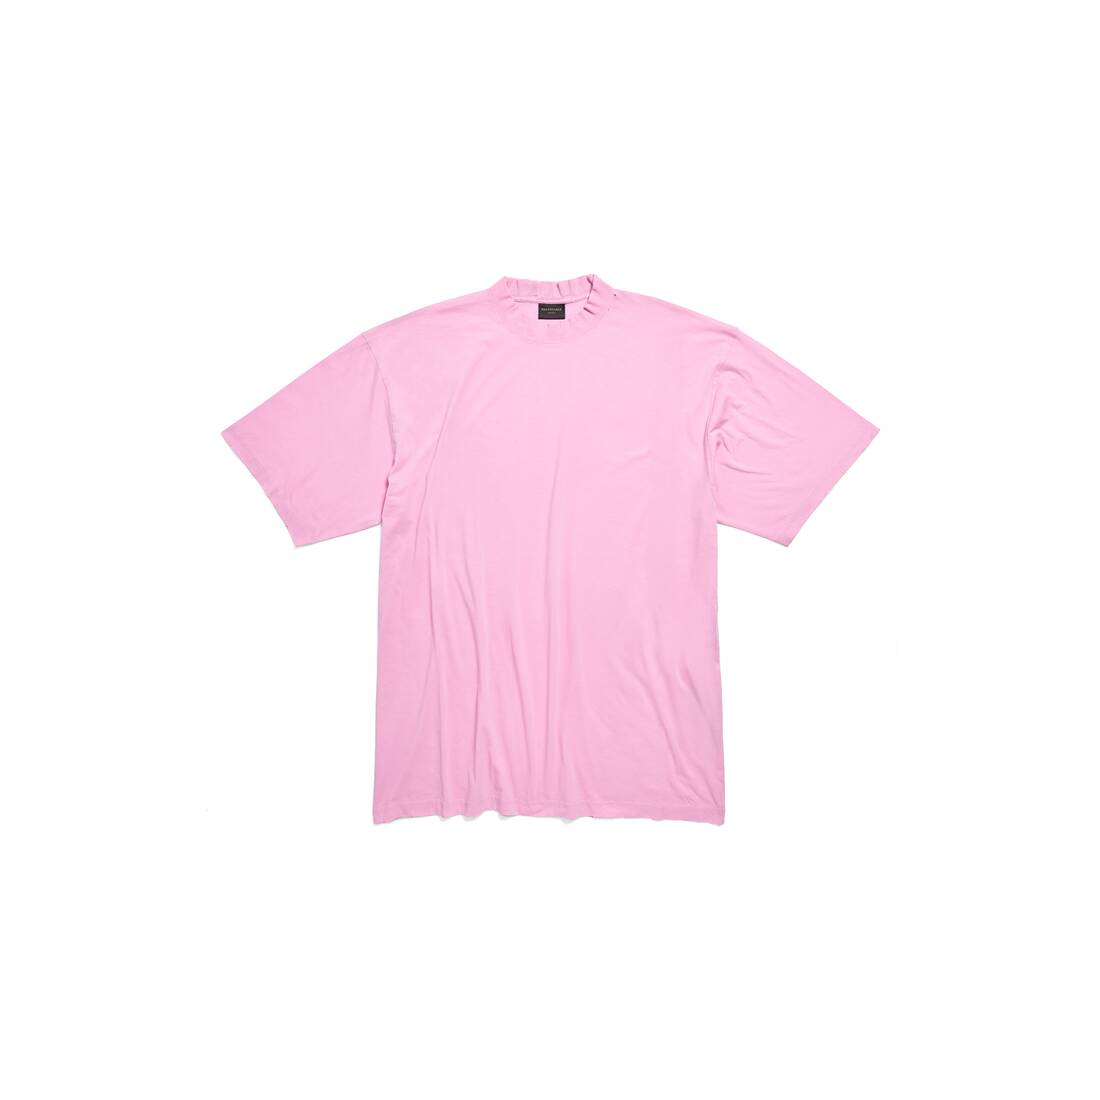 Balenciaga T-shirt Medium Fit in Pink/black